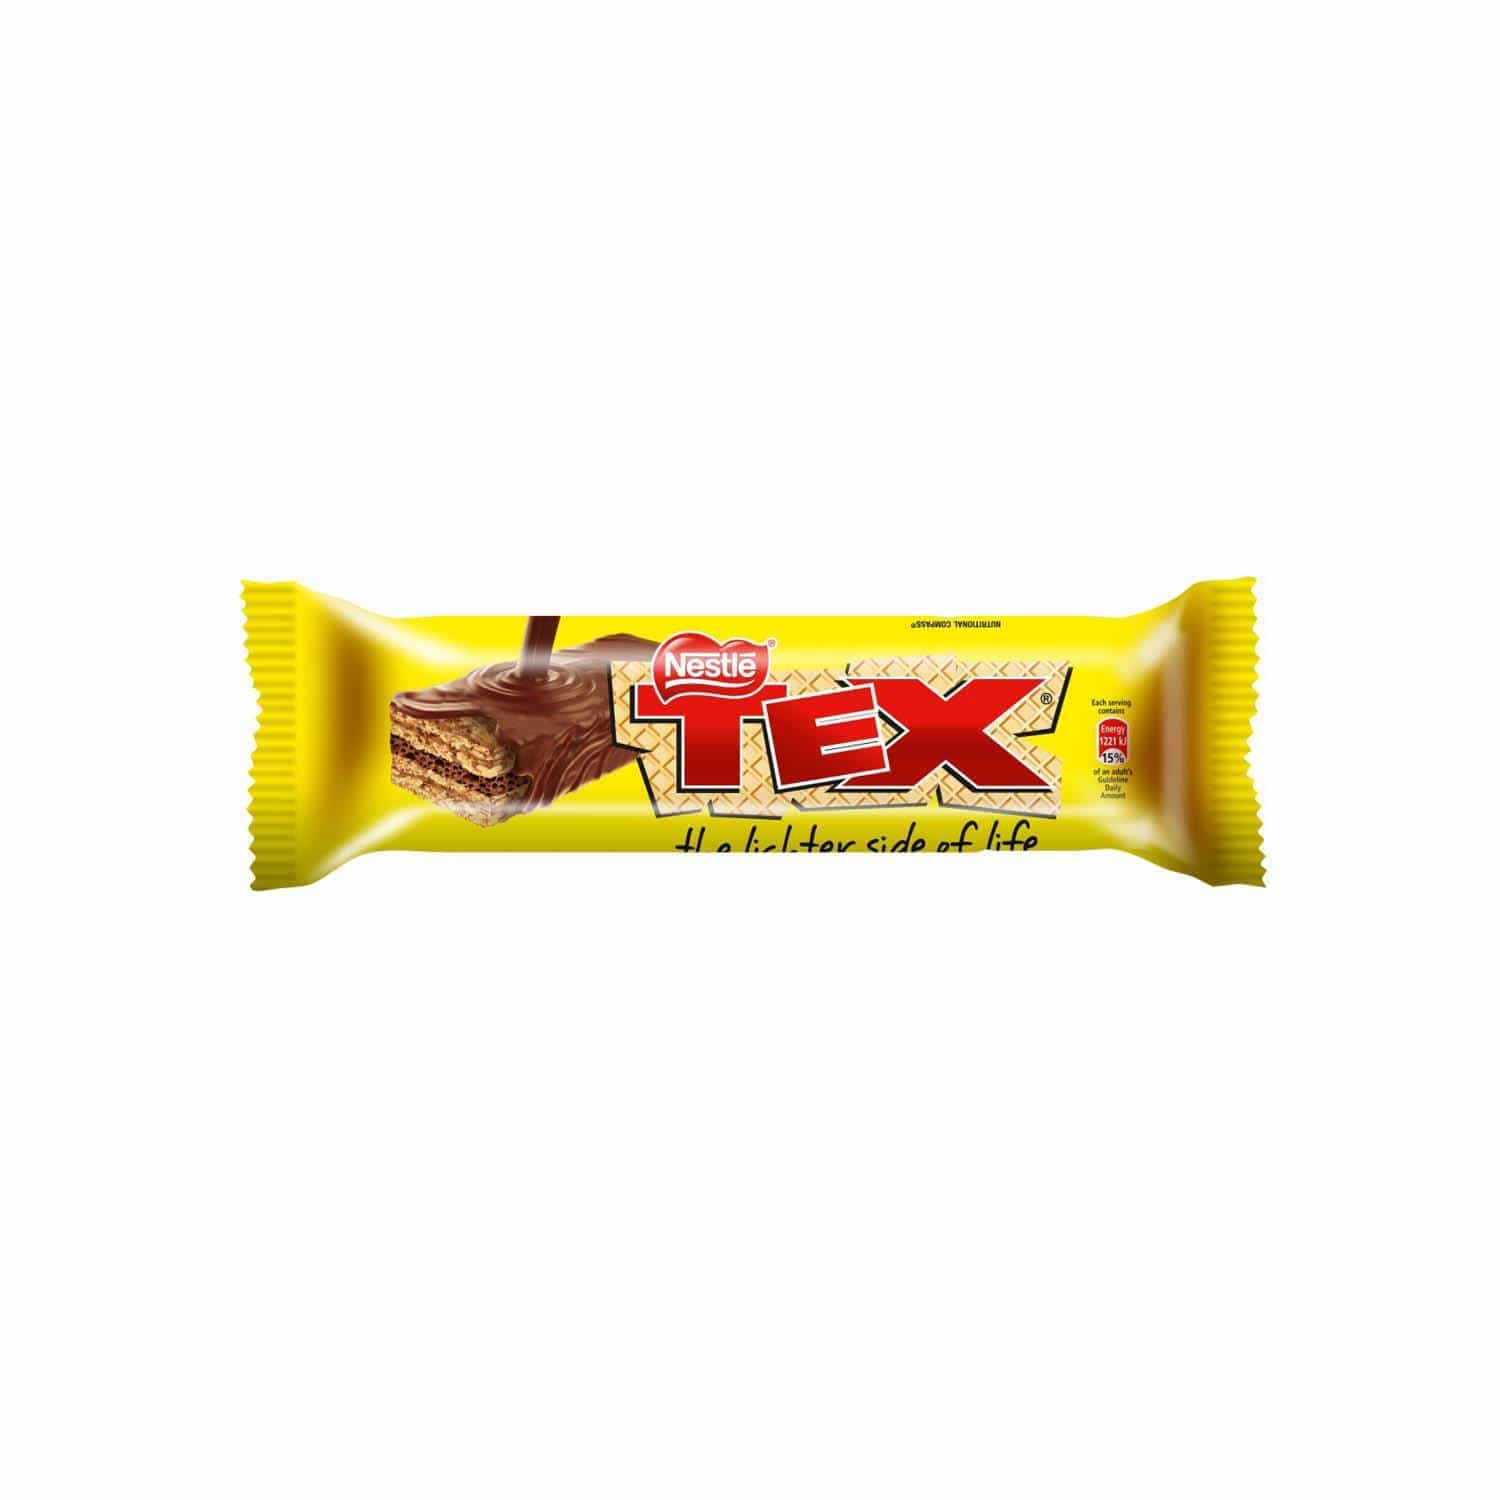 Nestlé Household Nestlé Tex Chocolate Bar 58g 6009188004132 232633